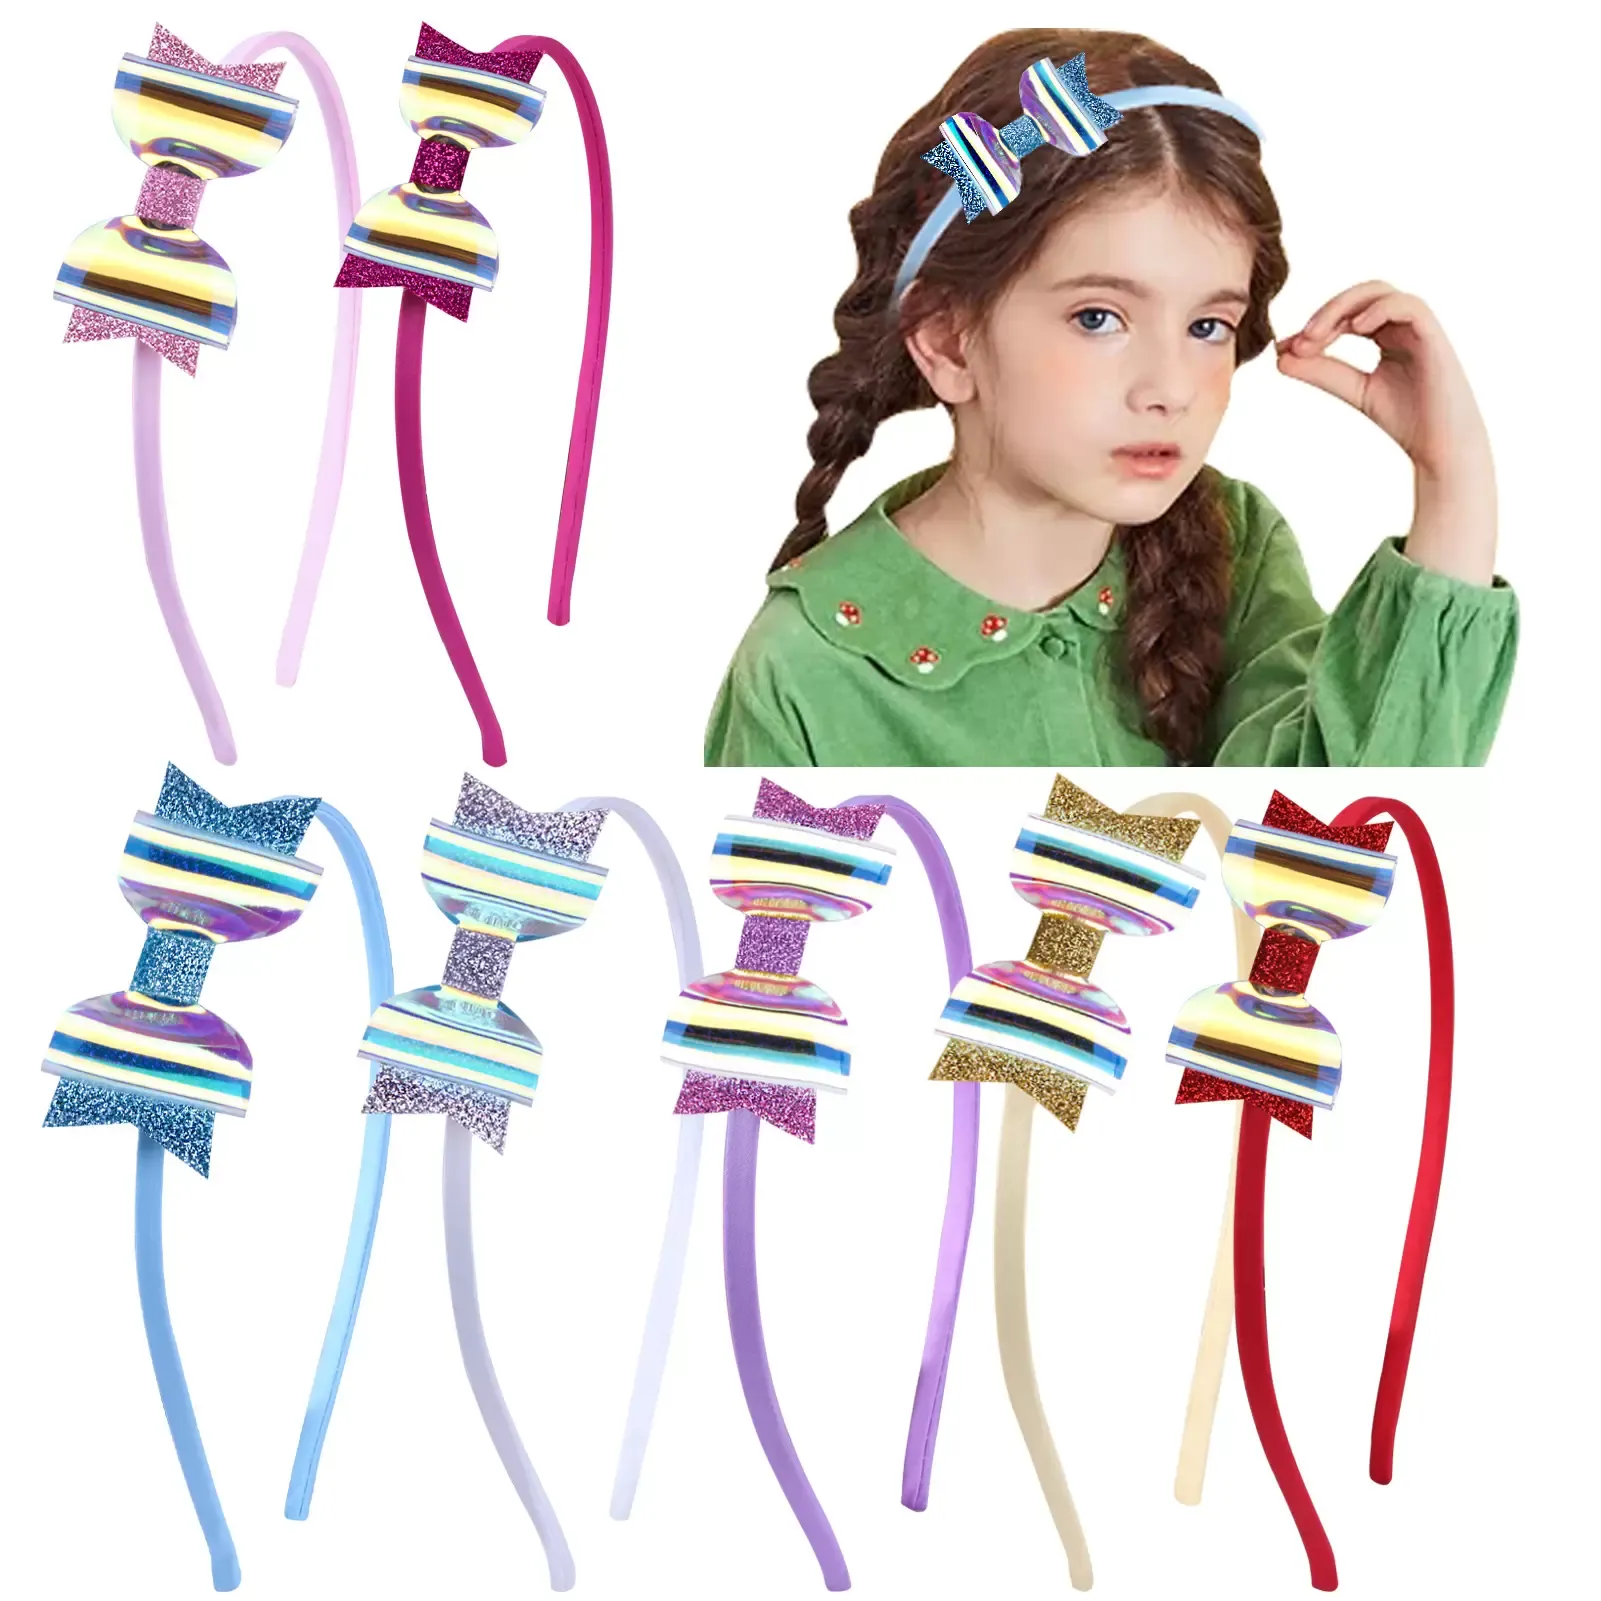 Europe Baby Girl Hair Clasp Glitter Bowknot Hairhoop Kids Hairband pannband Princess Child Dance Performance Hair Accessory 7 Färger